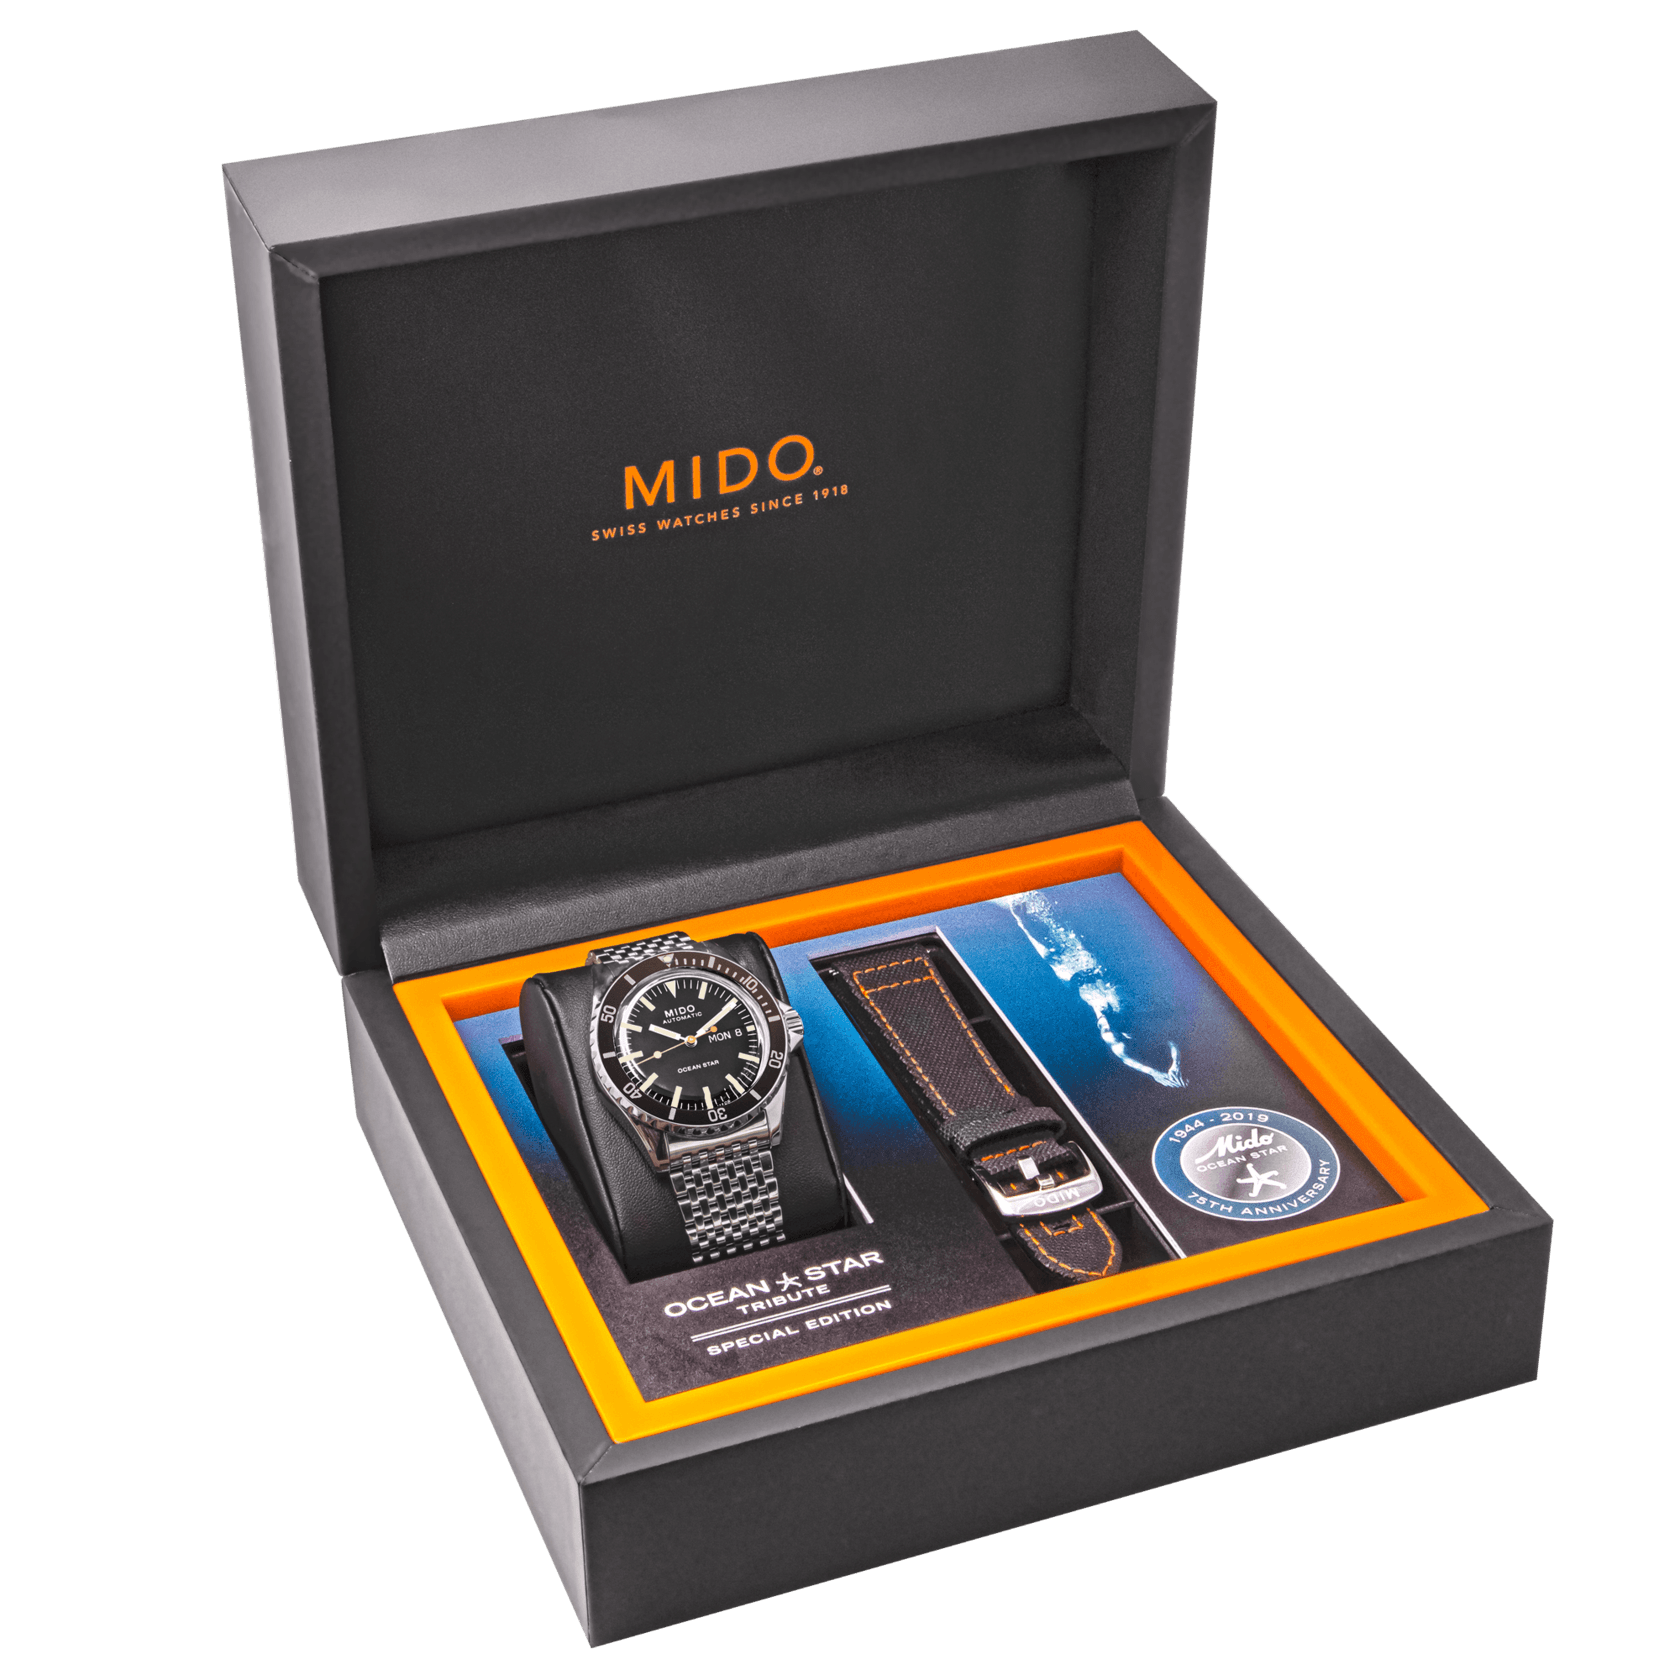 Mido Ocean Star Tribute Special Edition Black Dial Men's Watch M0268301105100